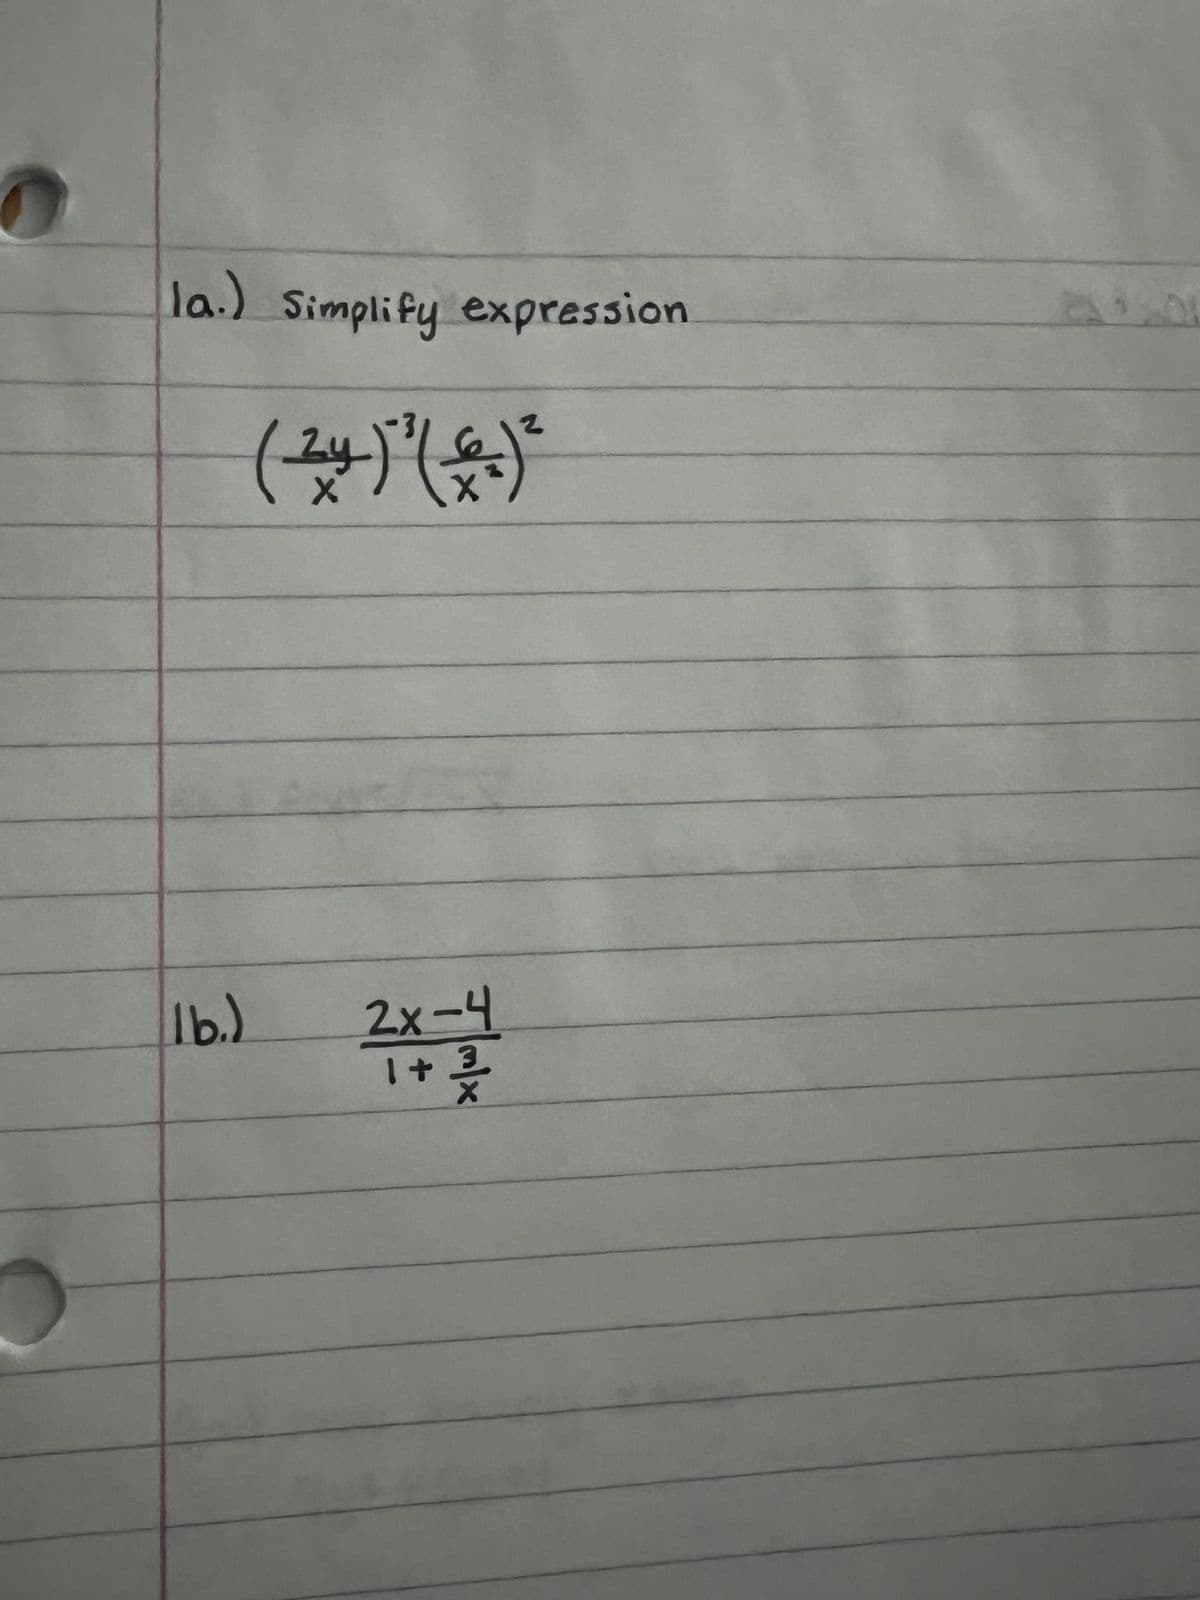 O
la.) Simplify expression
(24) ²¹( € ) ²
lb.)
2x-4
1 + ²/1/2
m/x